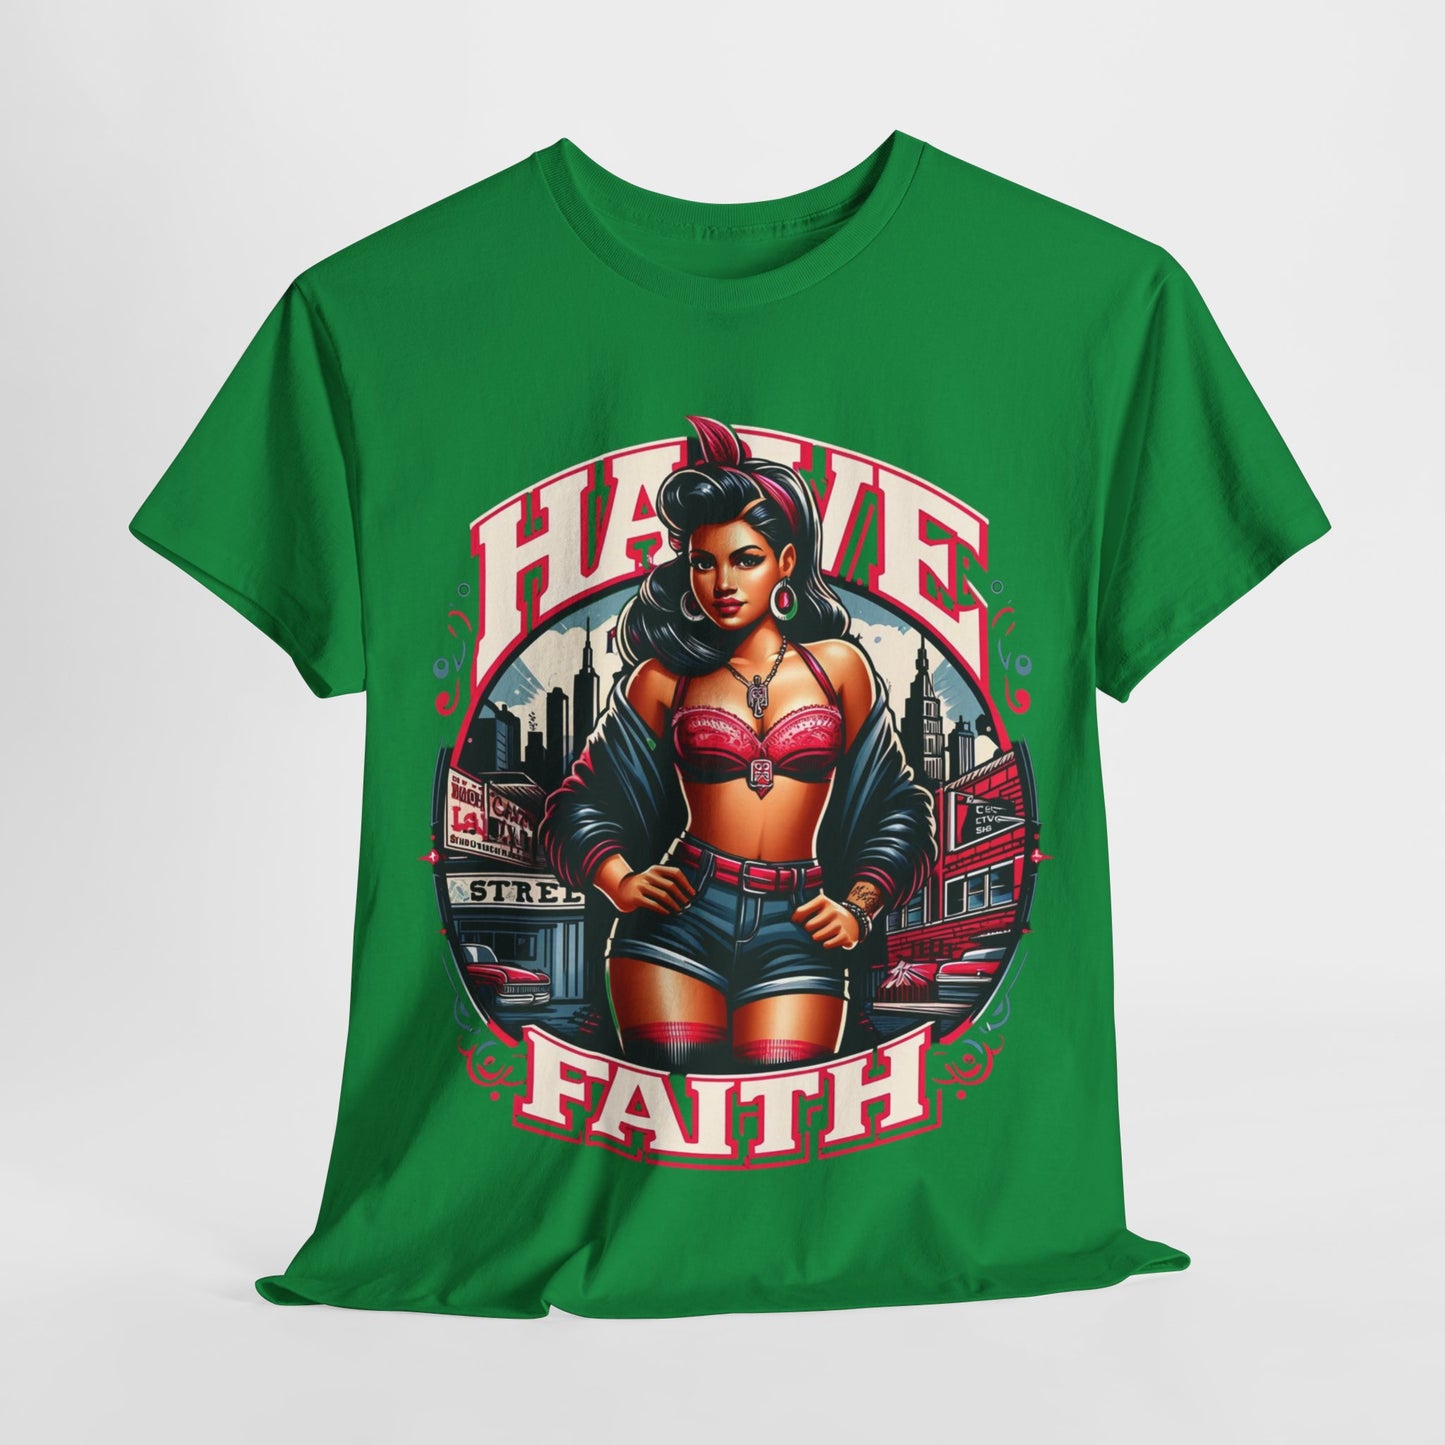 Y.M.L.Y. "Have Faith" T-Shirt Motivational Tee Urban Wear Street Wear Classic Cotton Tee